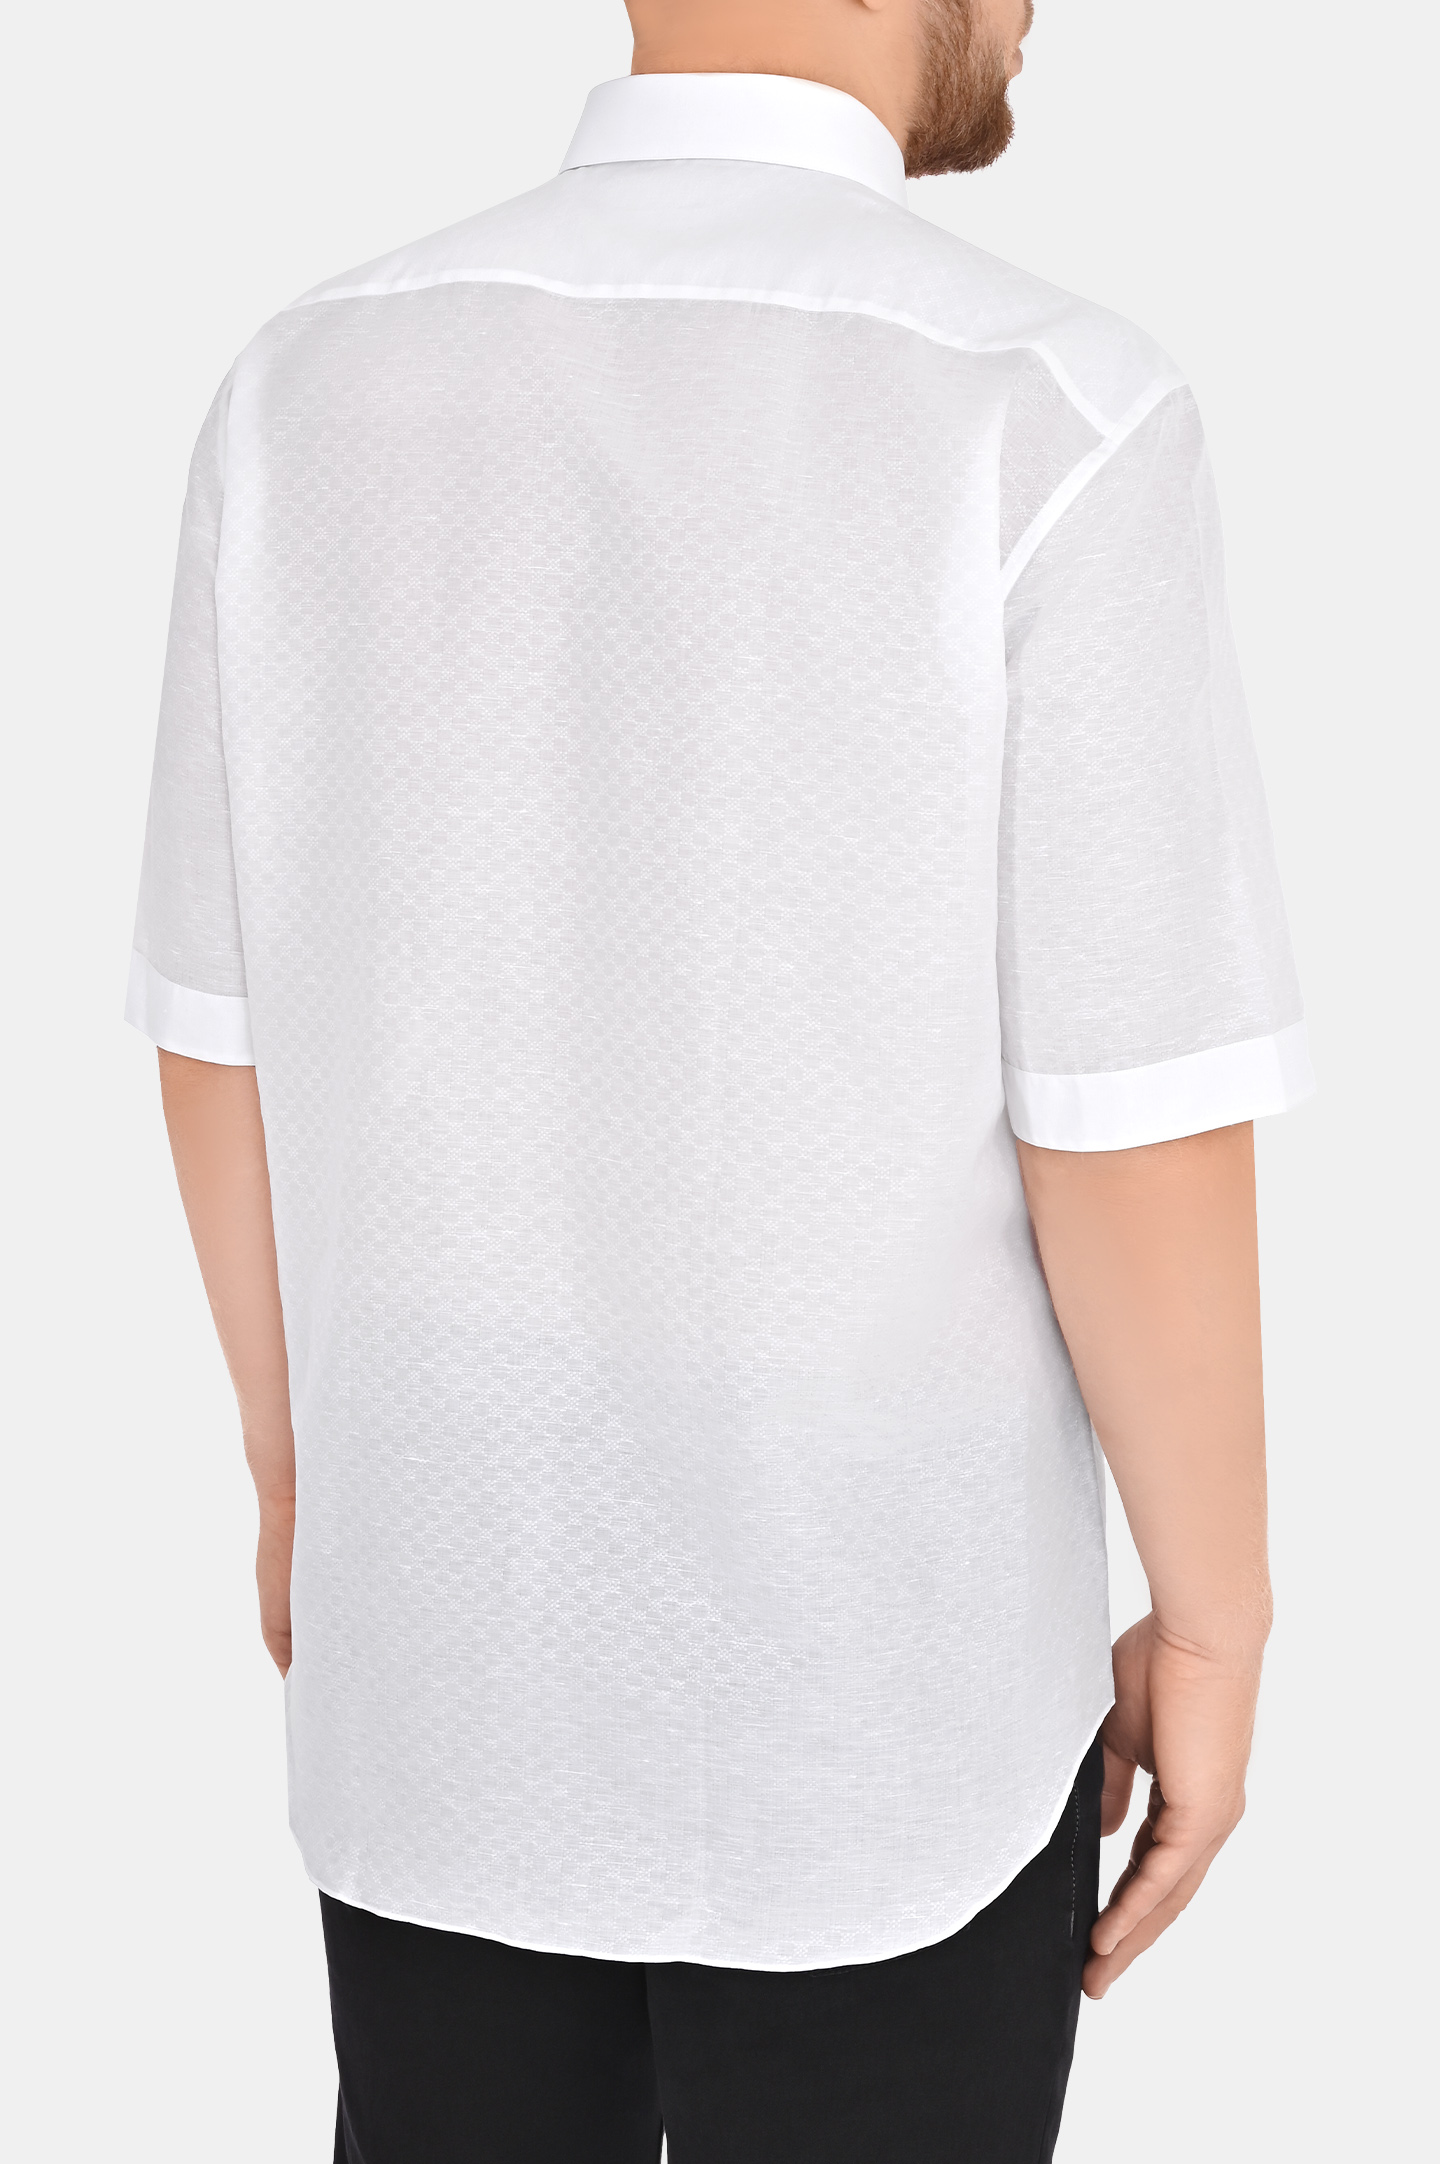 Рубашка STEFANO RICCI MC006721 R2558, цвет: Белый, Мужской